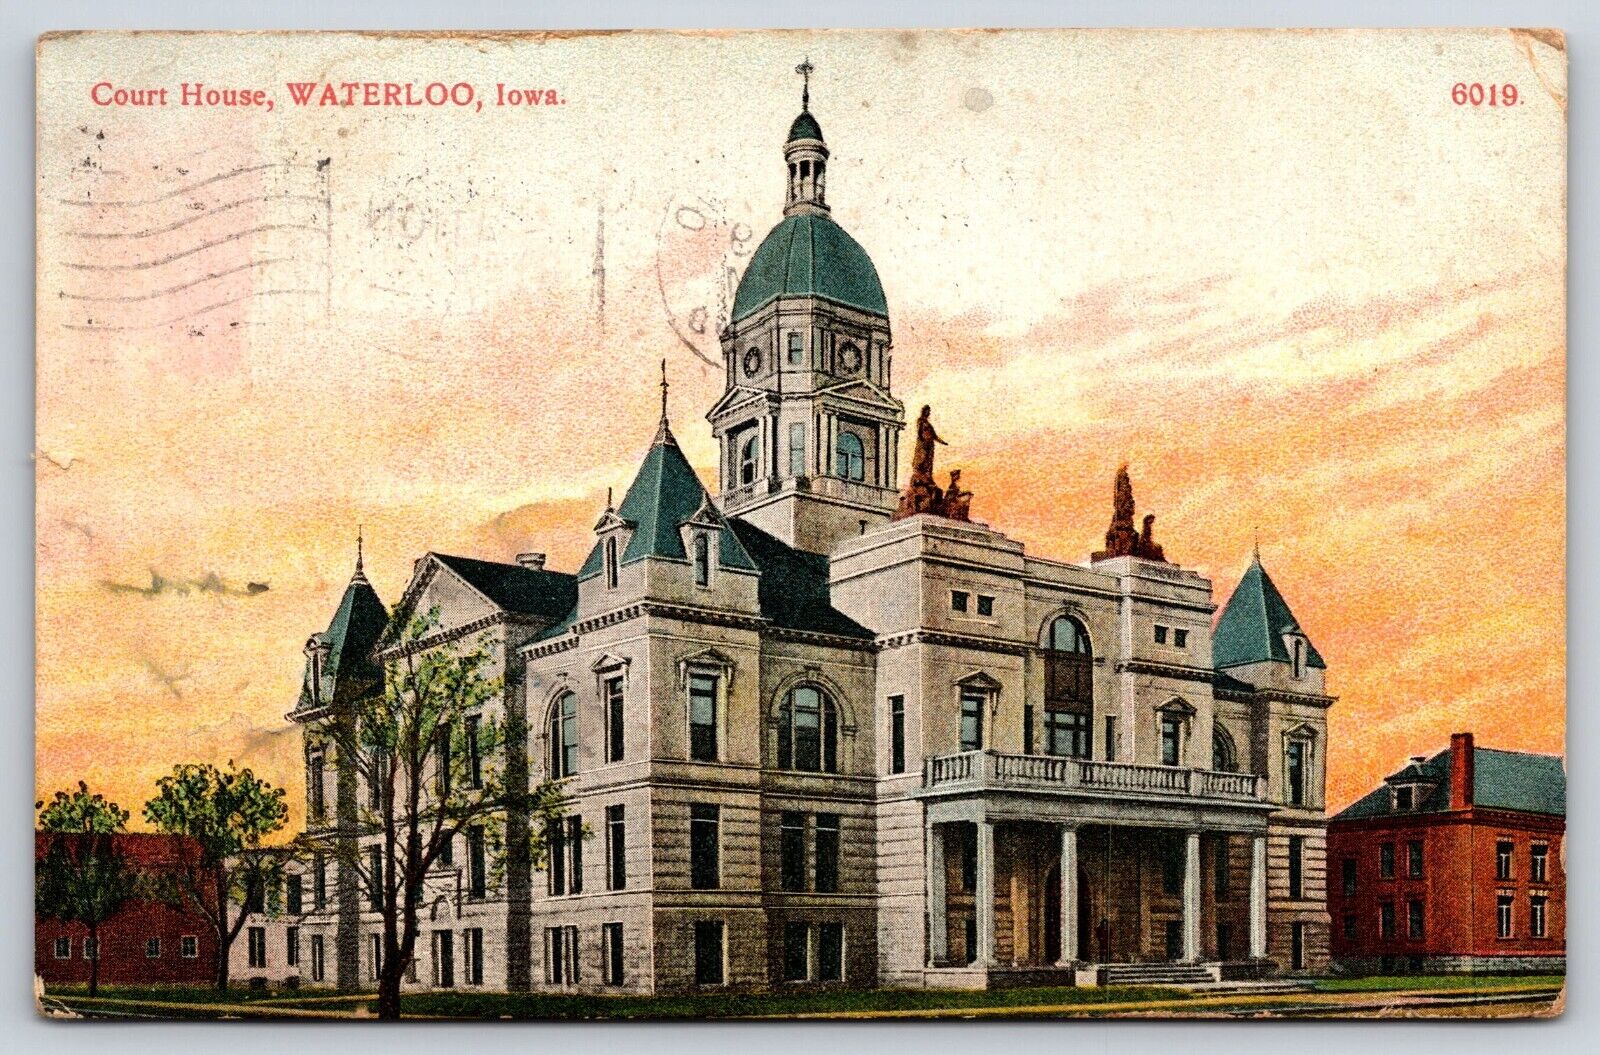 Original Old Vintage Antique Postcard Court House Building Waterloo, Iowa 1909